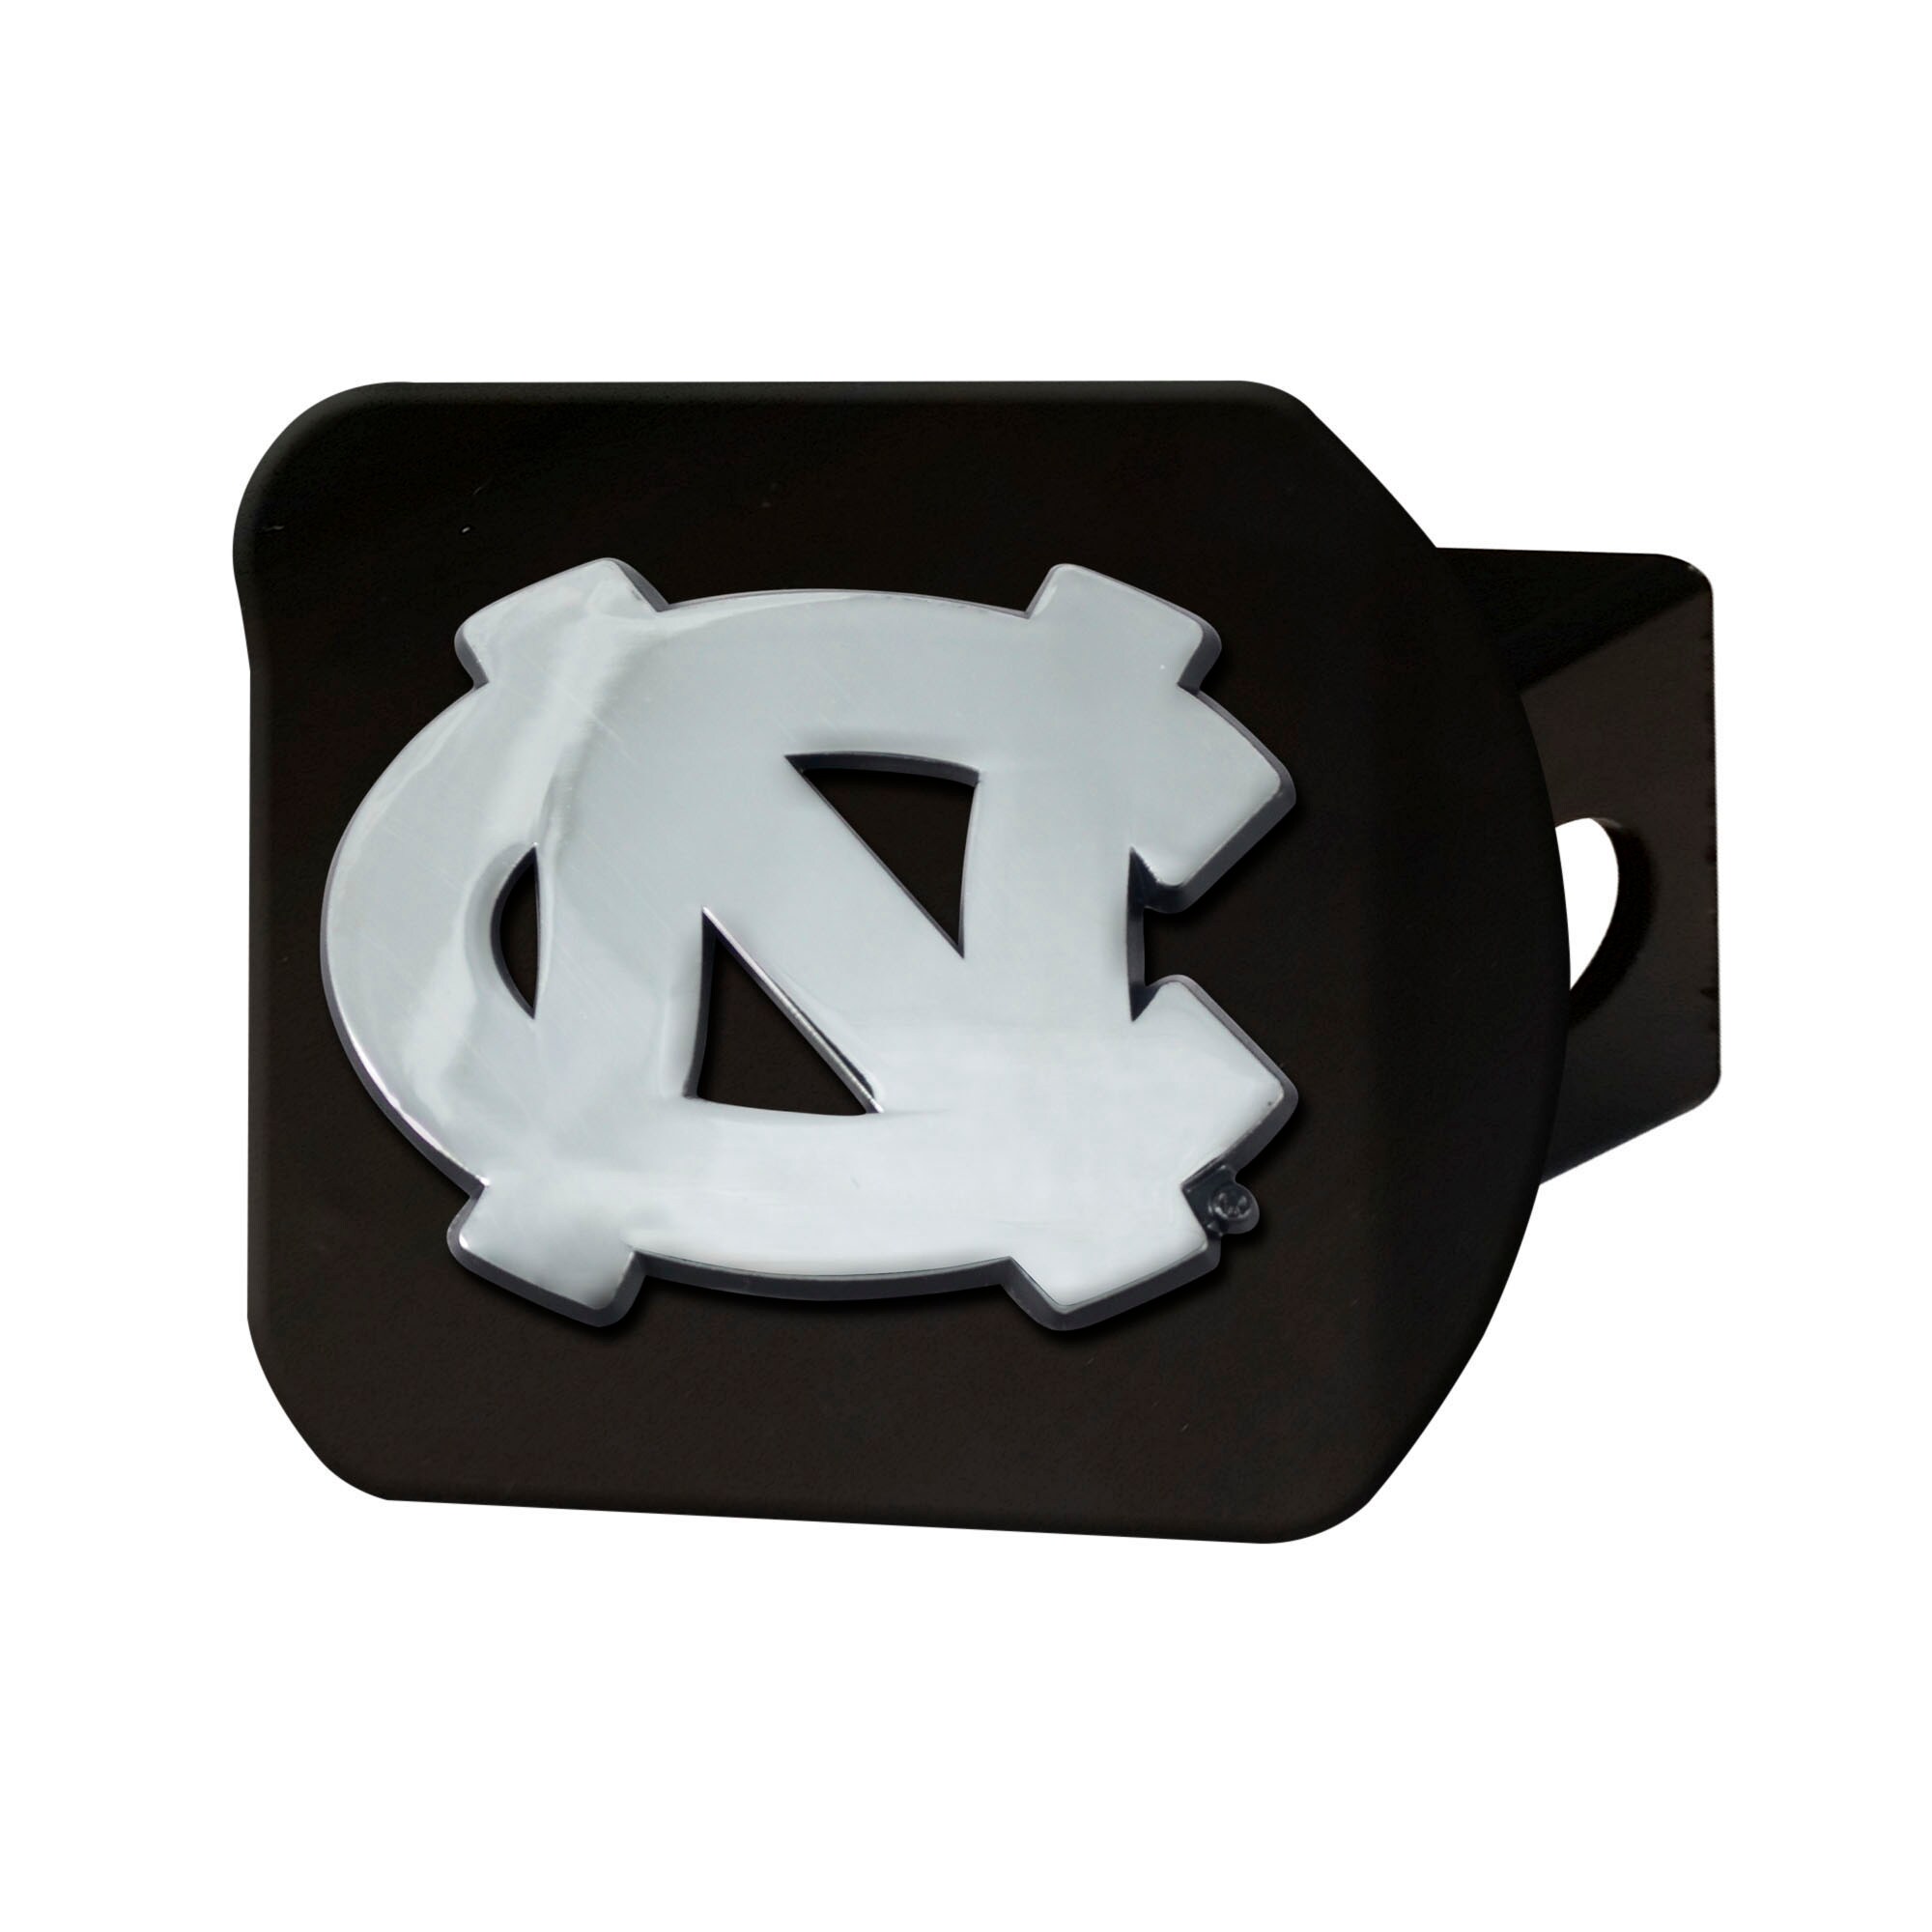 New NCAA North Carolina Tar Heels Black Mesh Extra Grip Steering Wheel Cover 